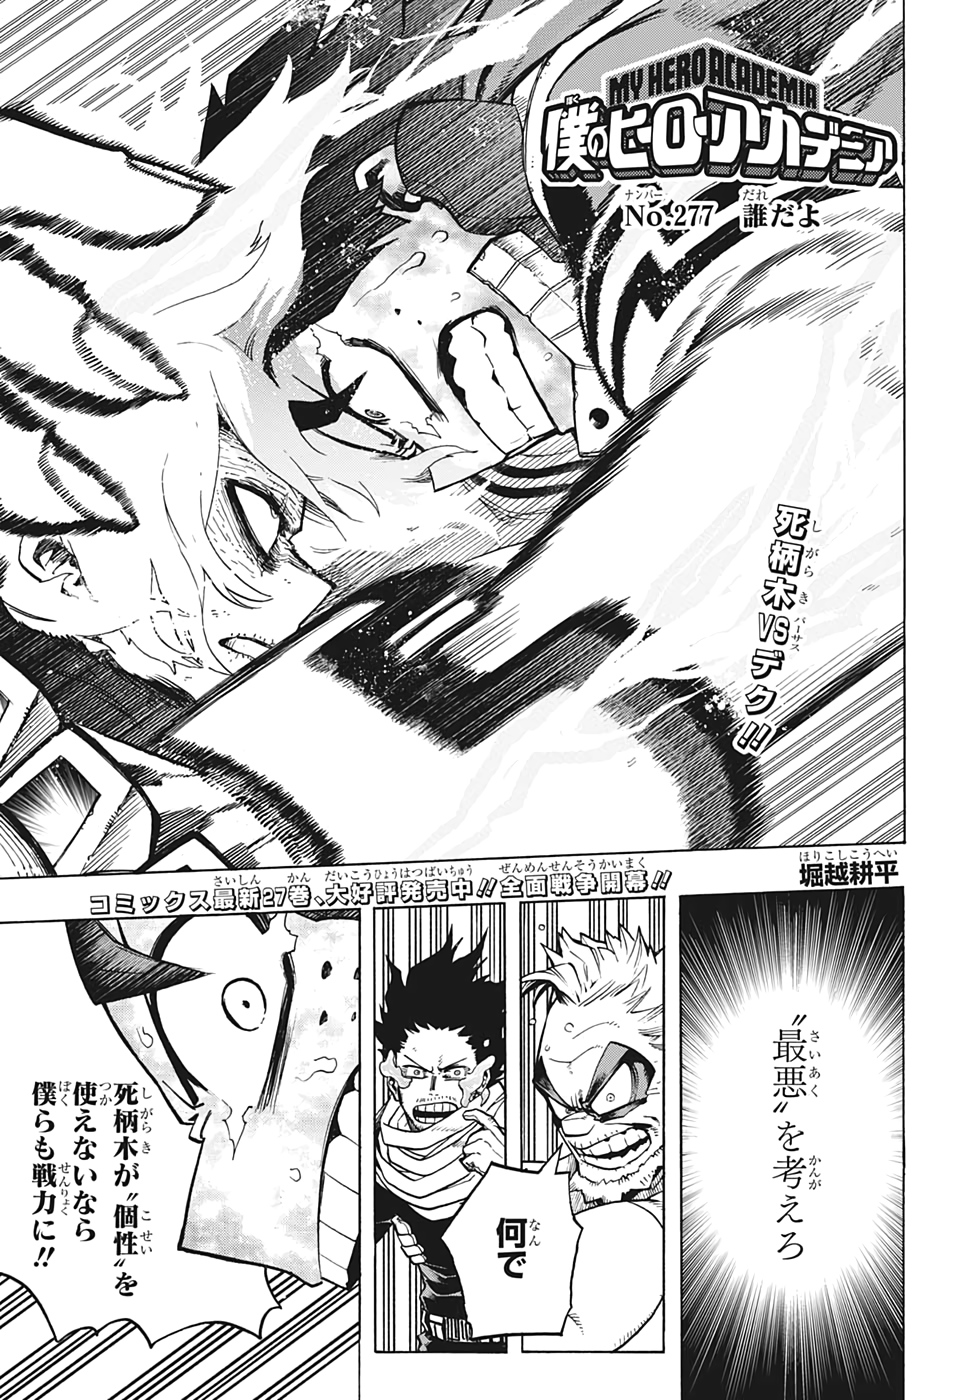 Boku no Hero Academia - Chapter 277 - Page 1